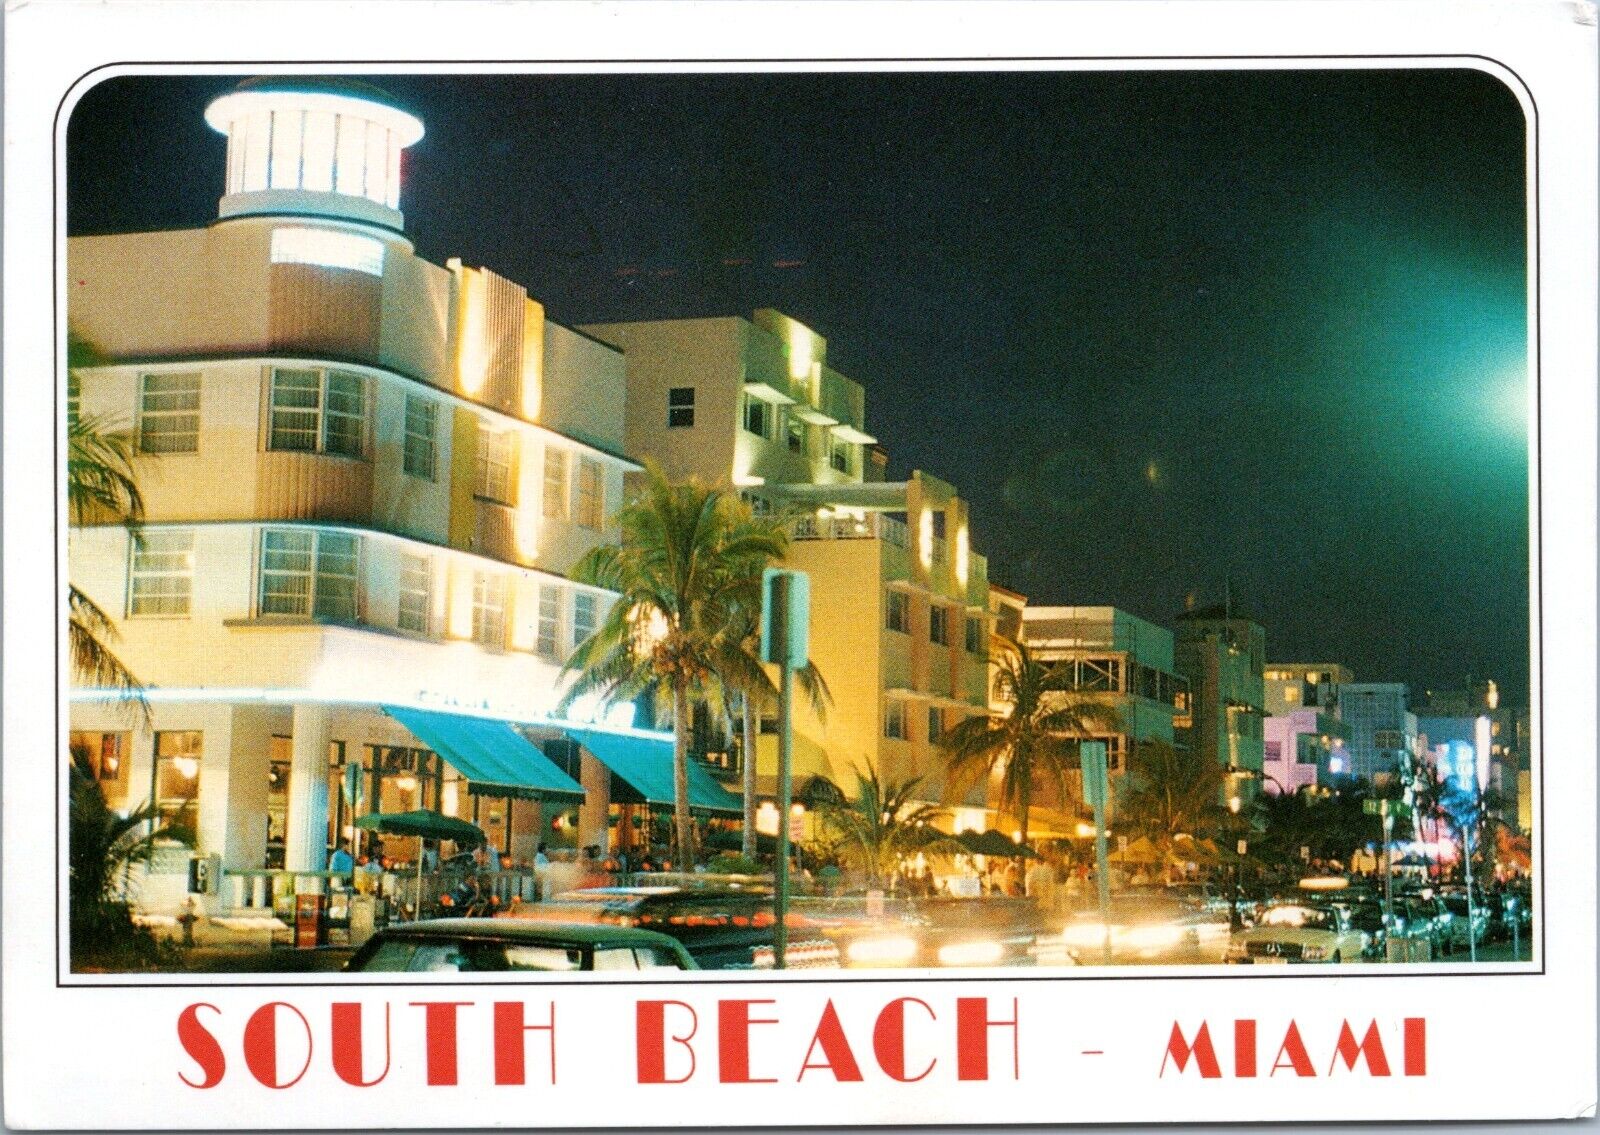 South Beach, Miami Florida - Chrome 4x6 Postcard - Night Life Art Deco District